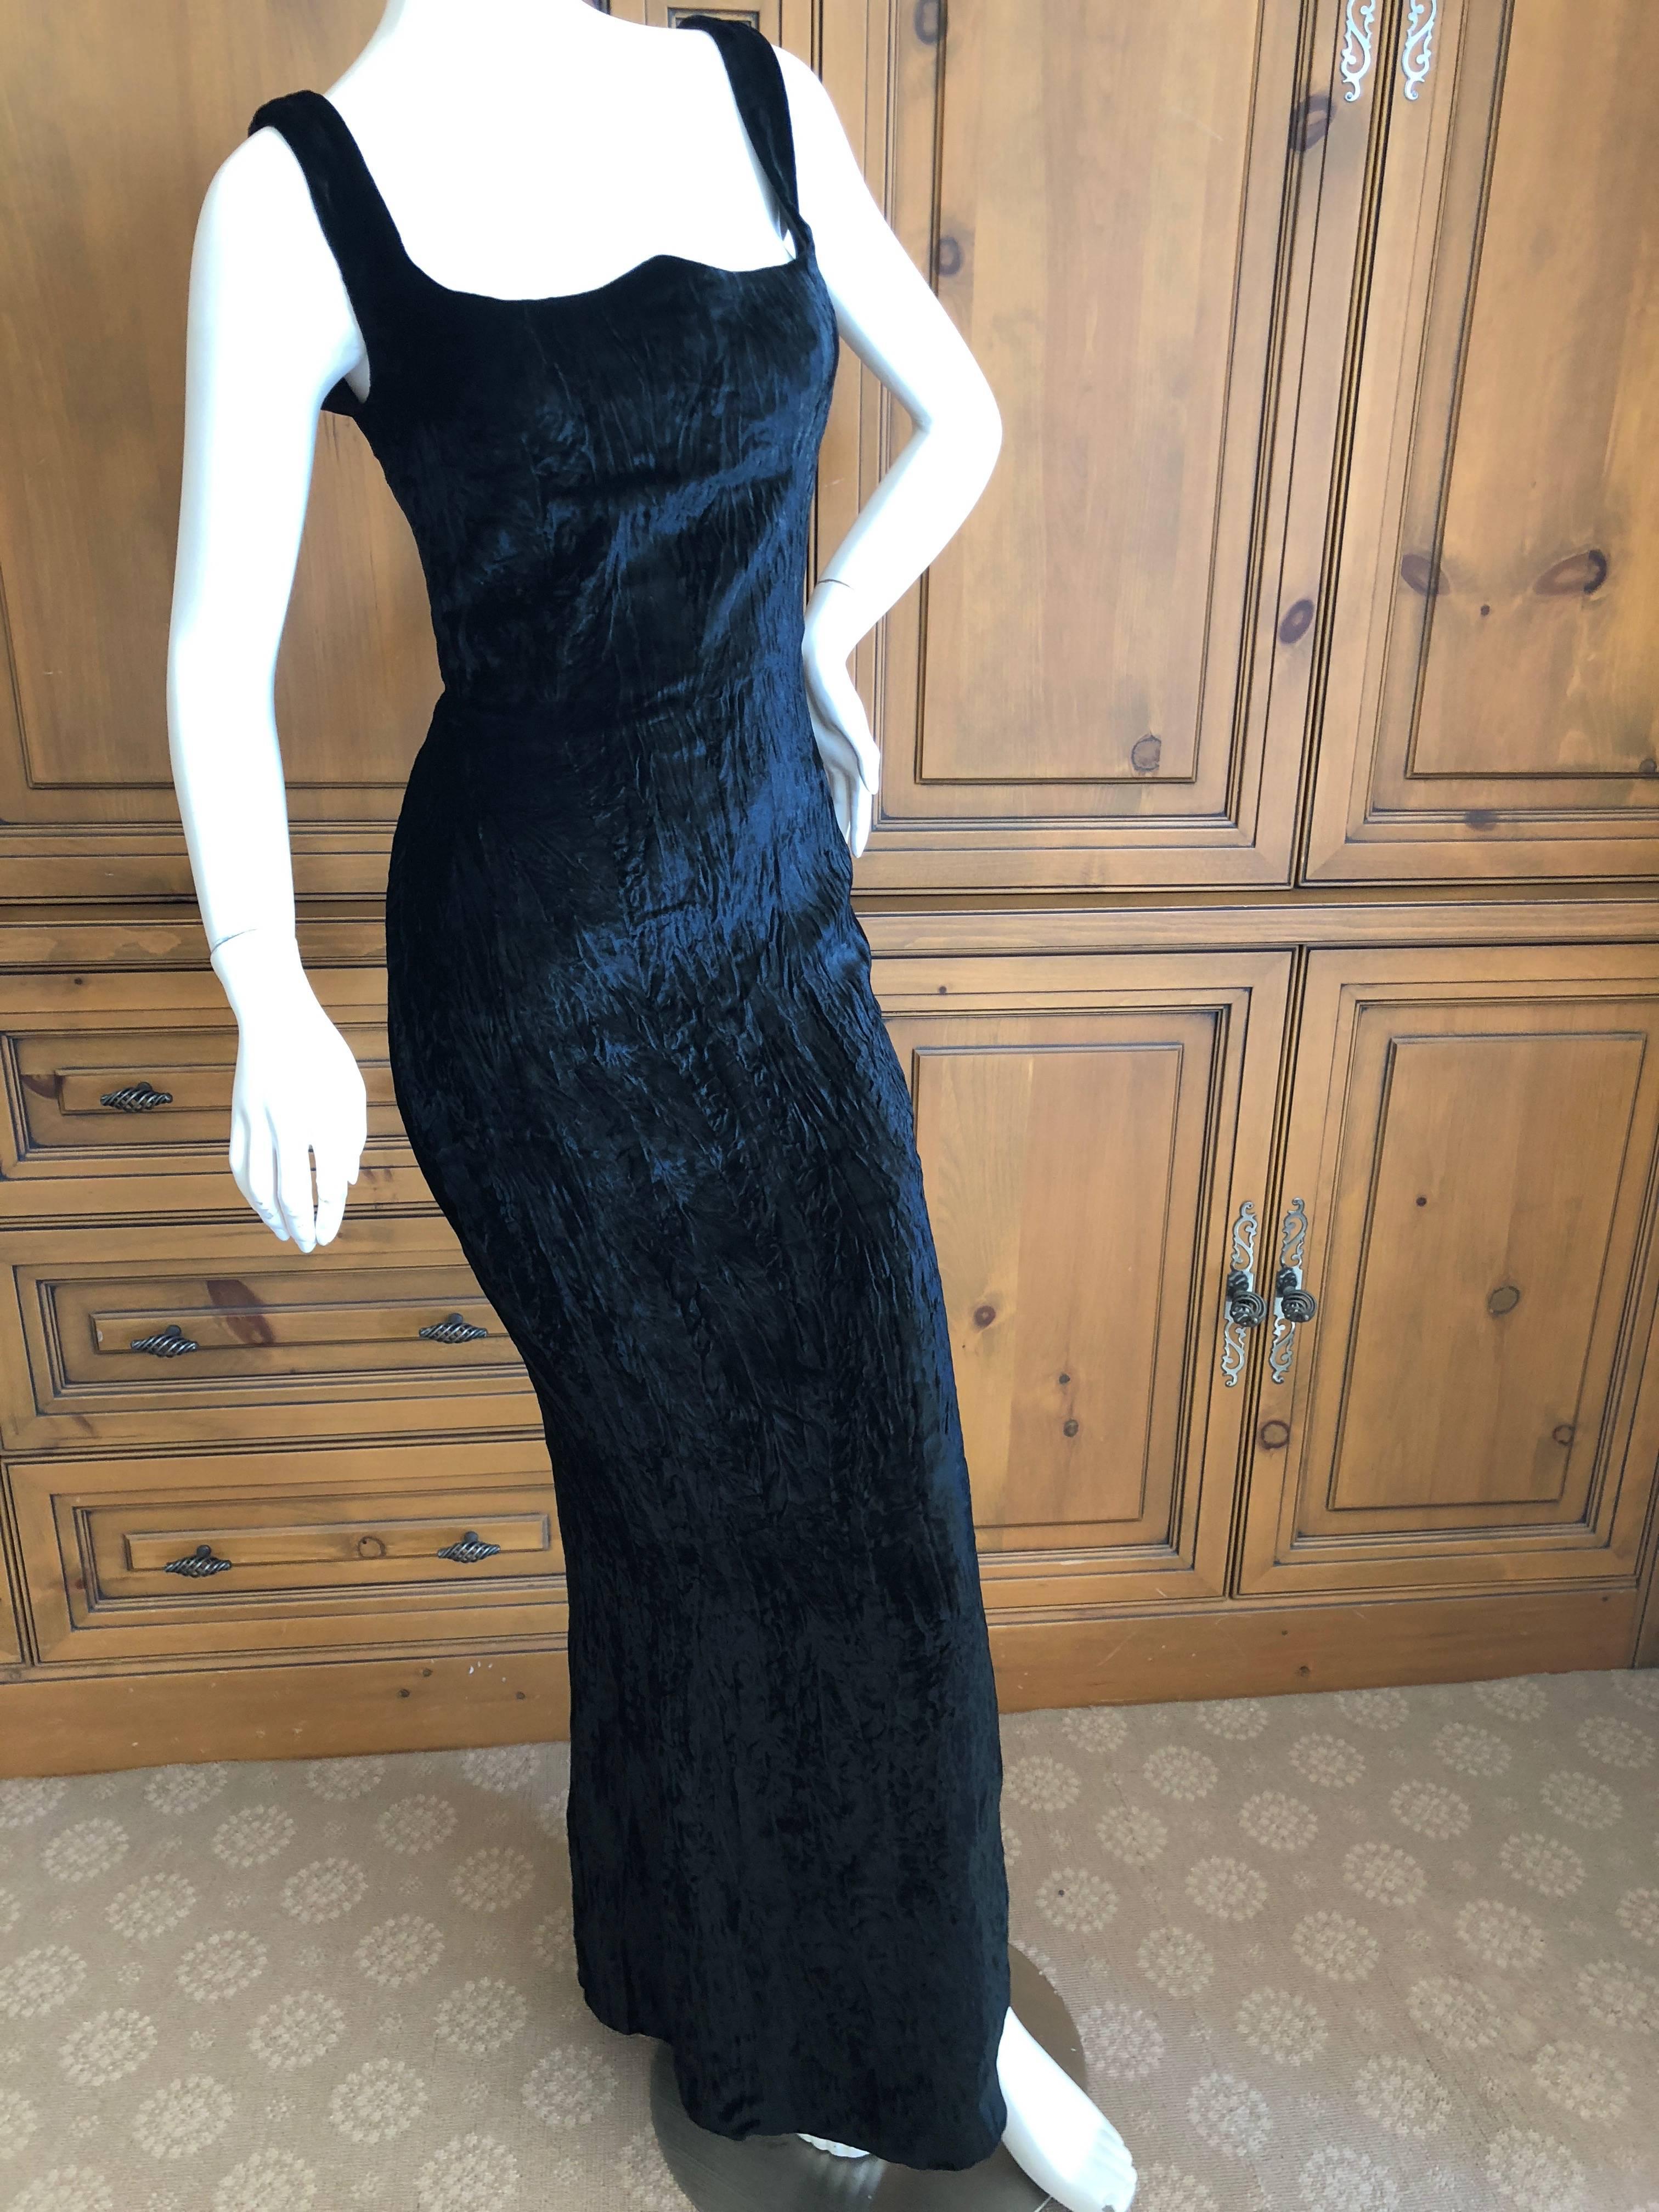 Gianni Versace Couture Vintage 1989 Textured Black Velvet  Evening Dress For Sale 1